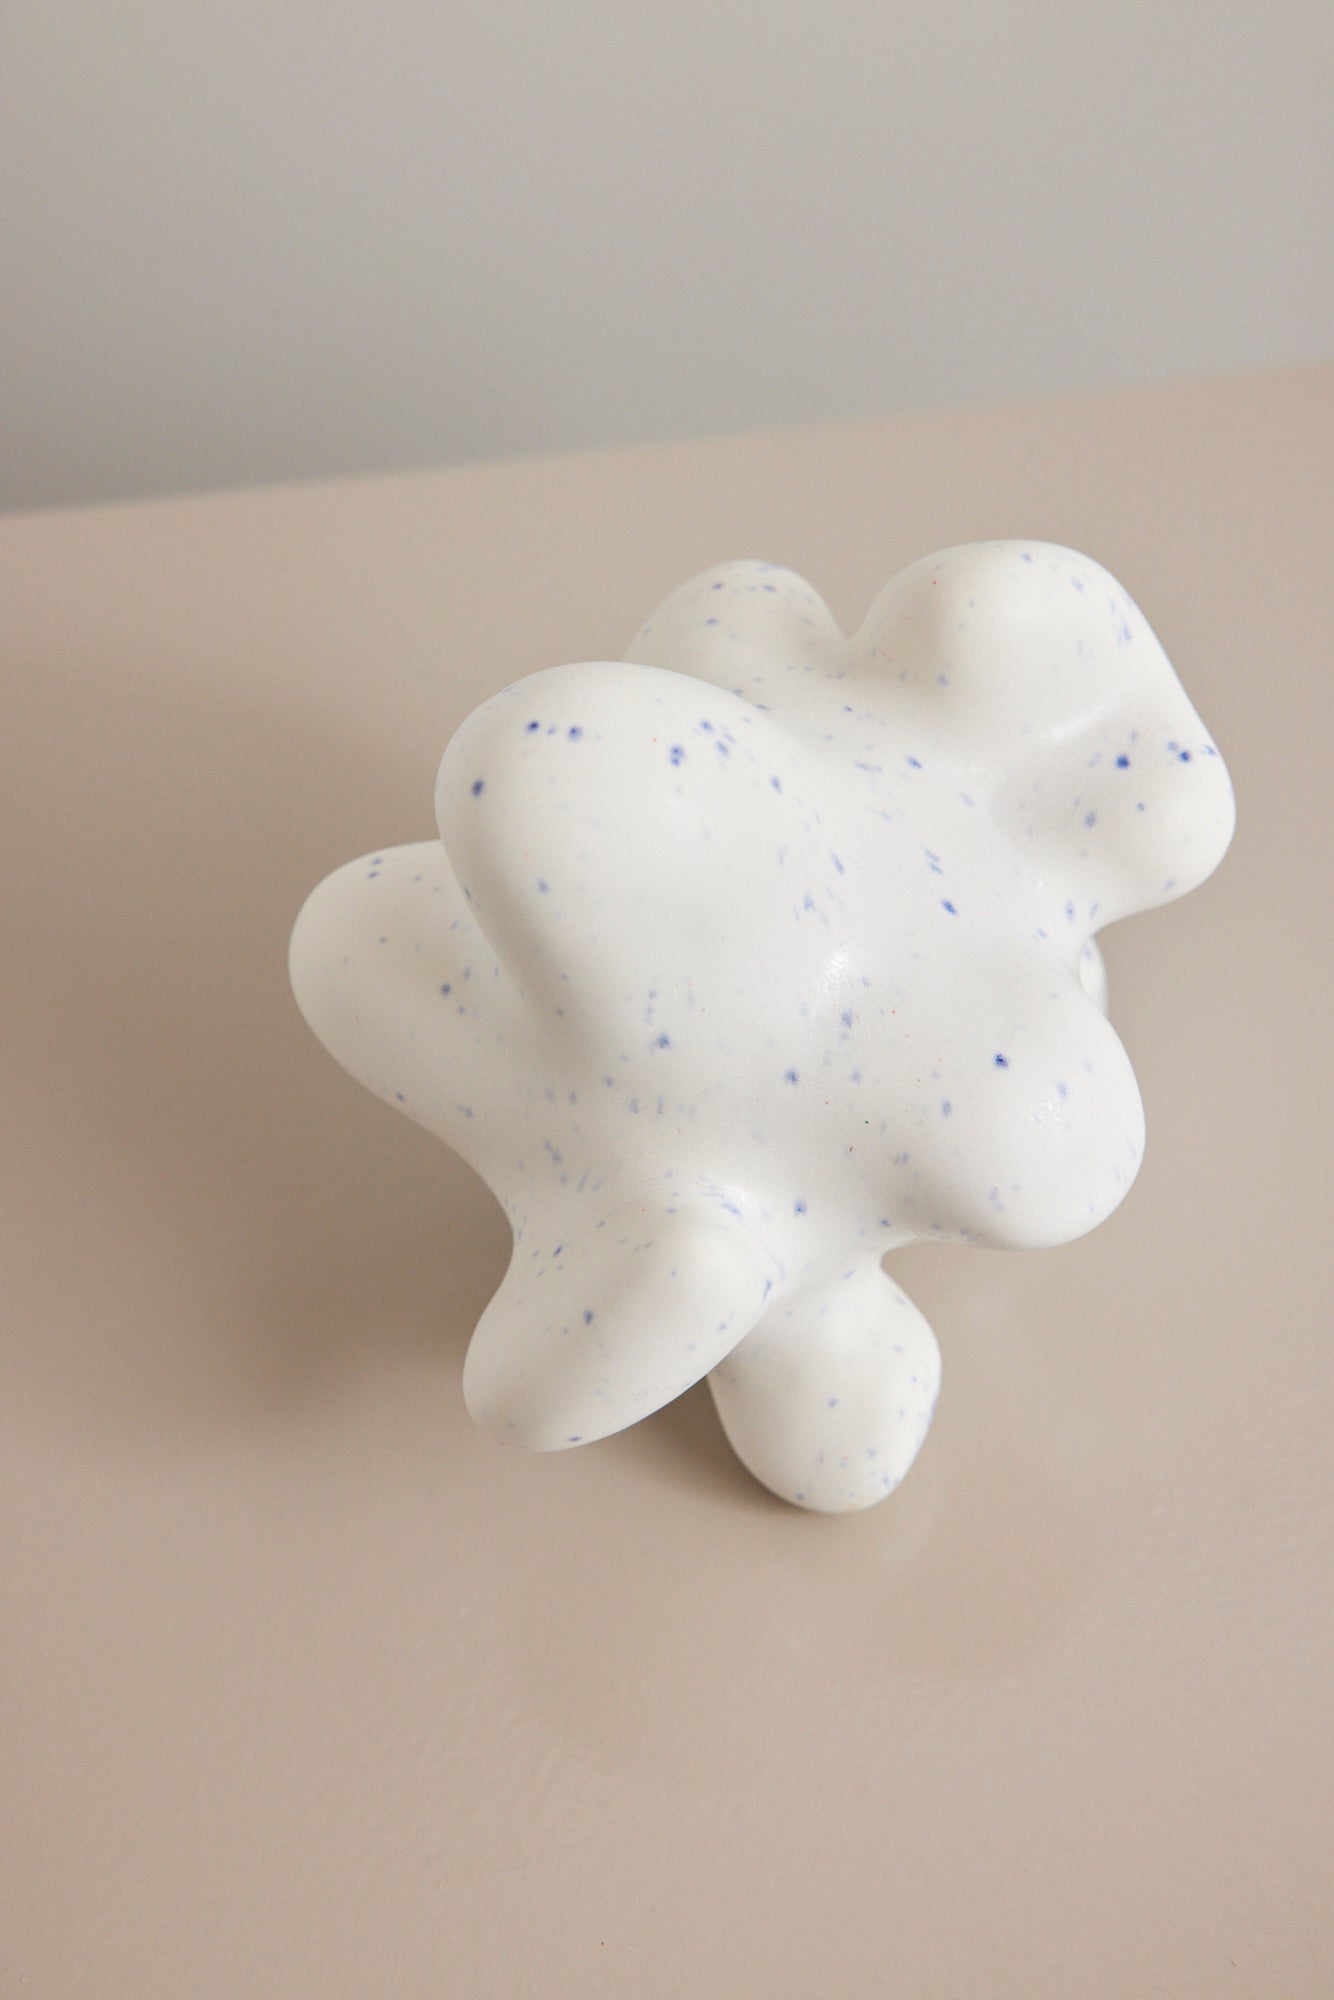 Thora Finnsdottir - Popganic White with blue dots